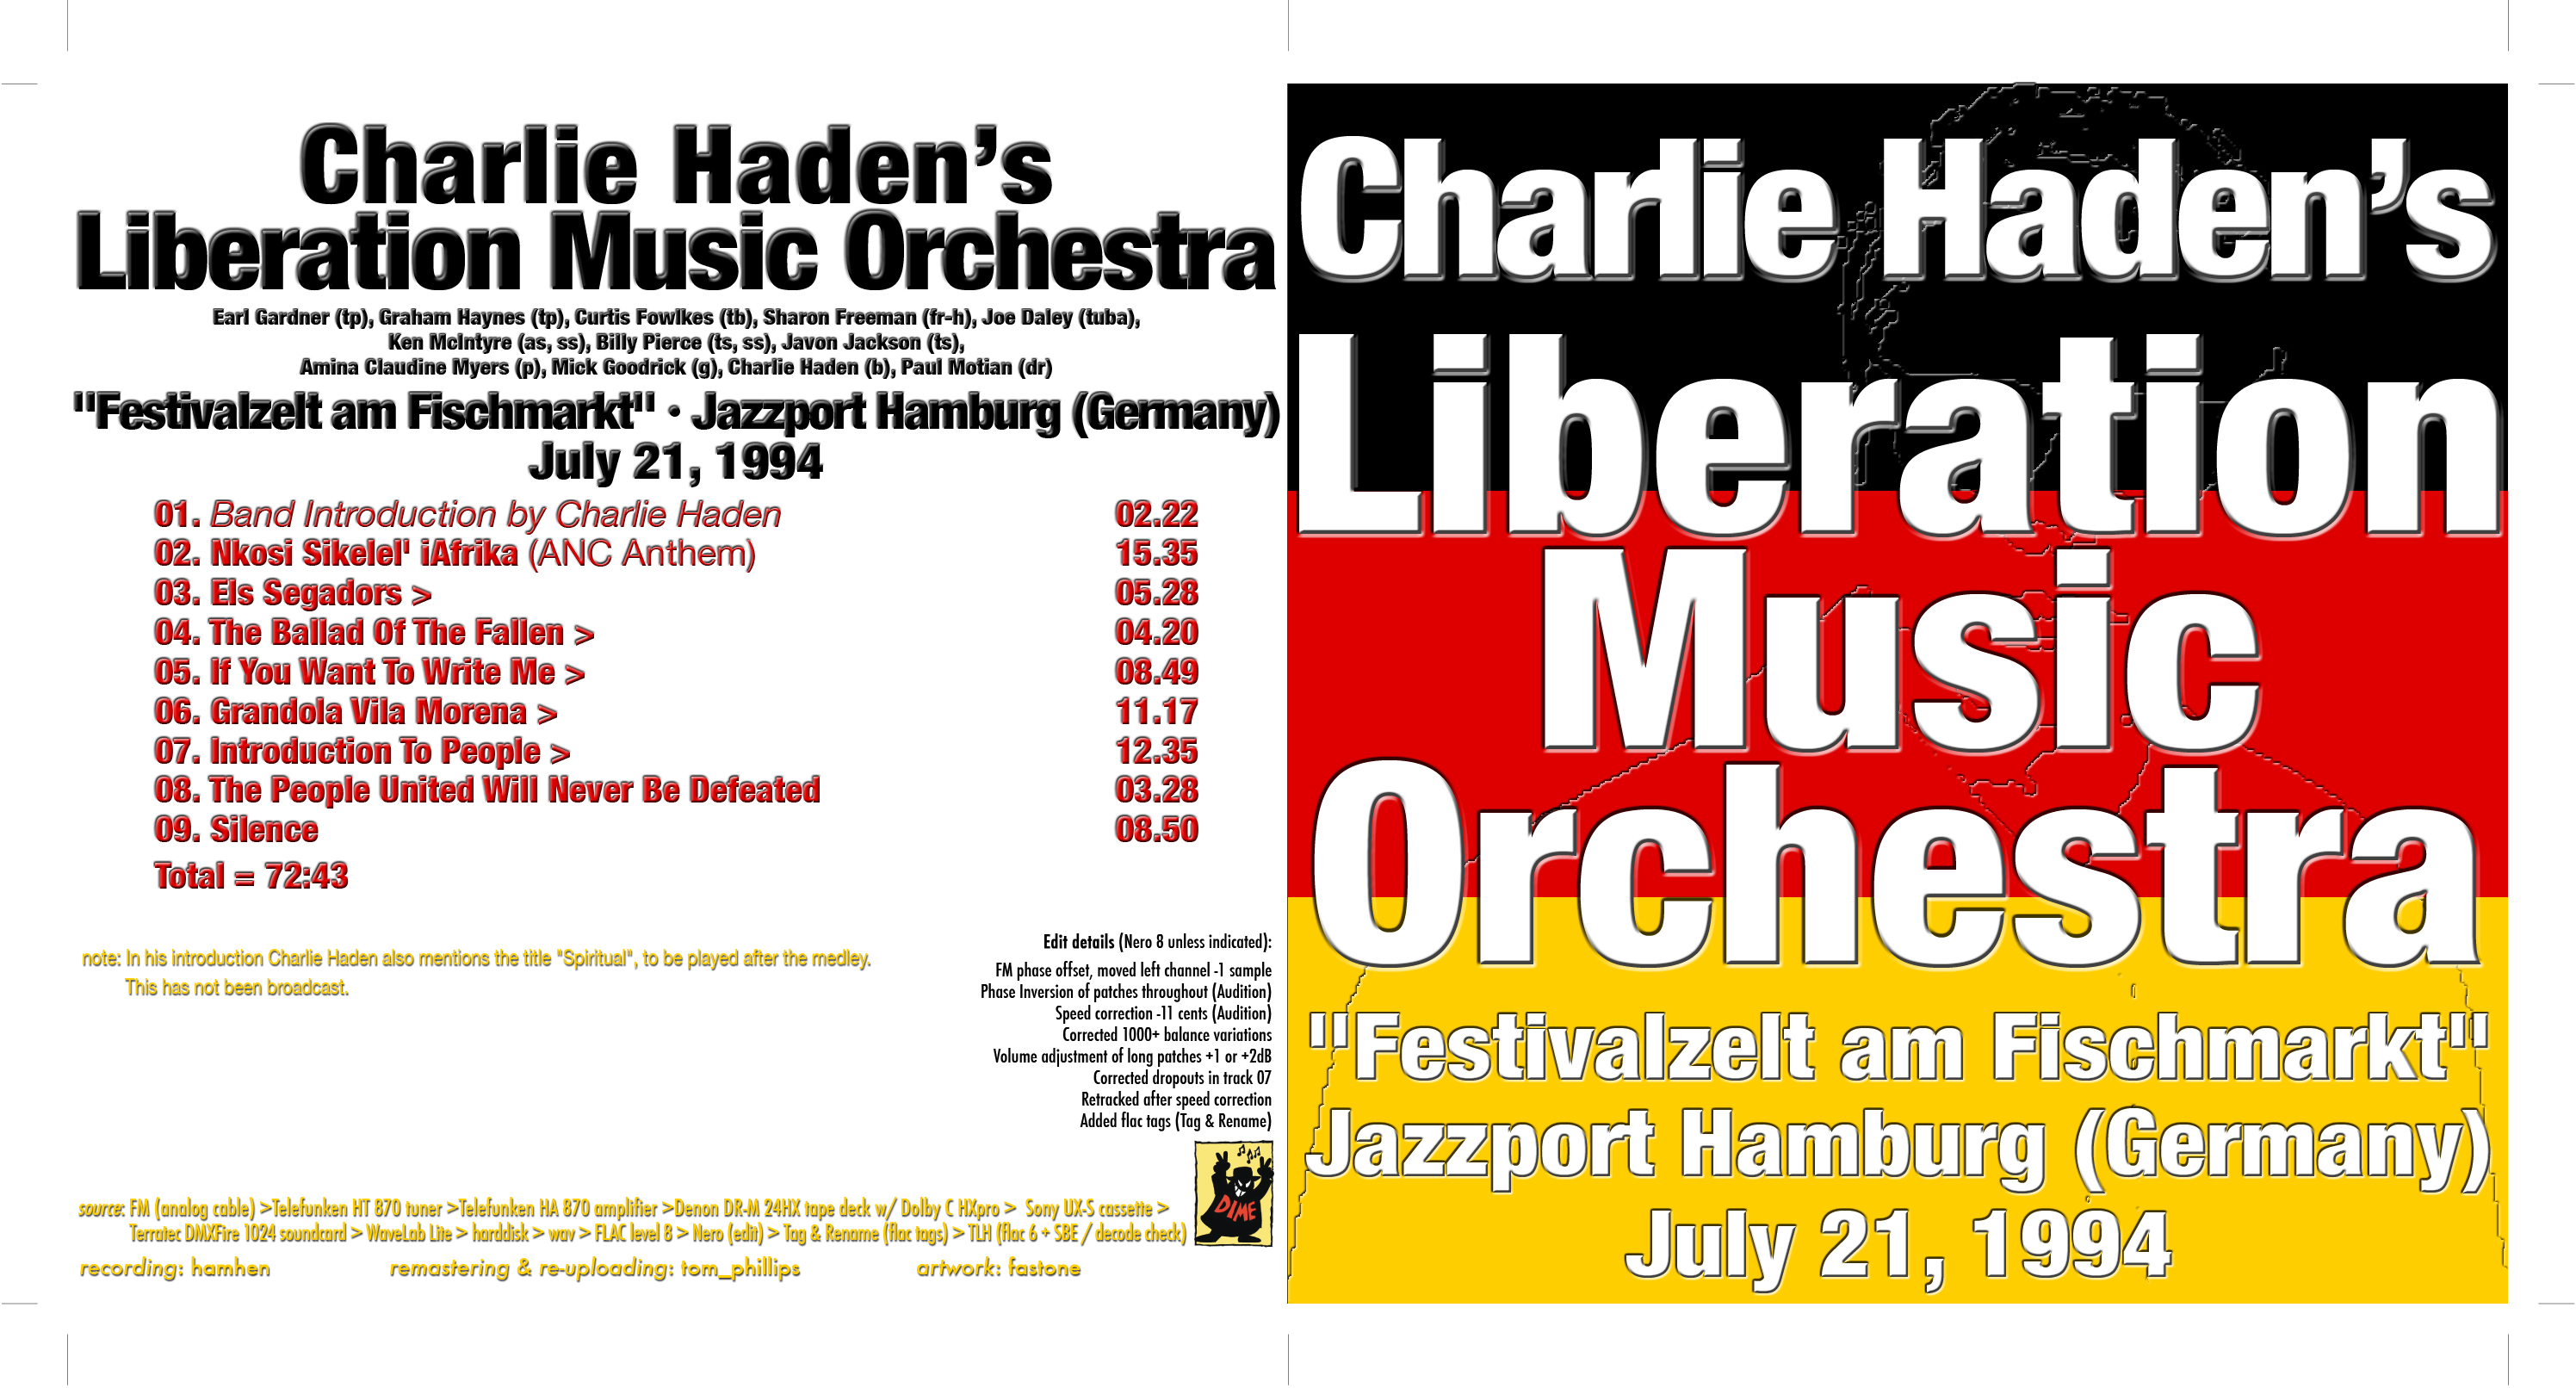 CharlieHadensLiberationMusicOrchestra1994-07-21FestivalzeltAmFischmarktHamburGermany (1).jpg